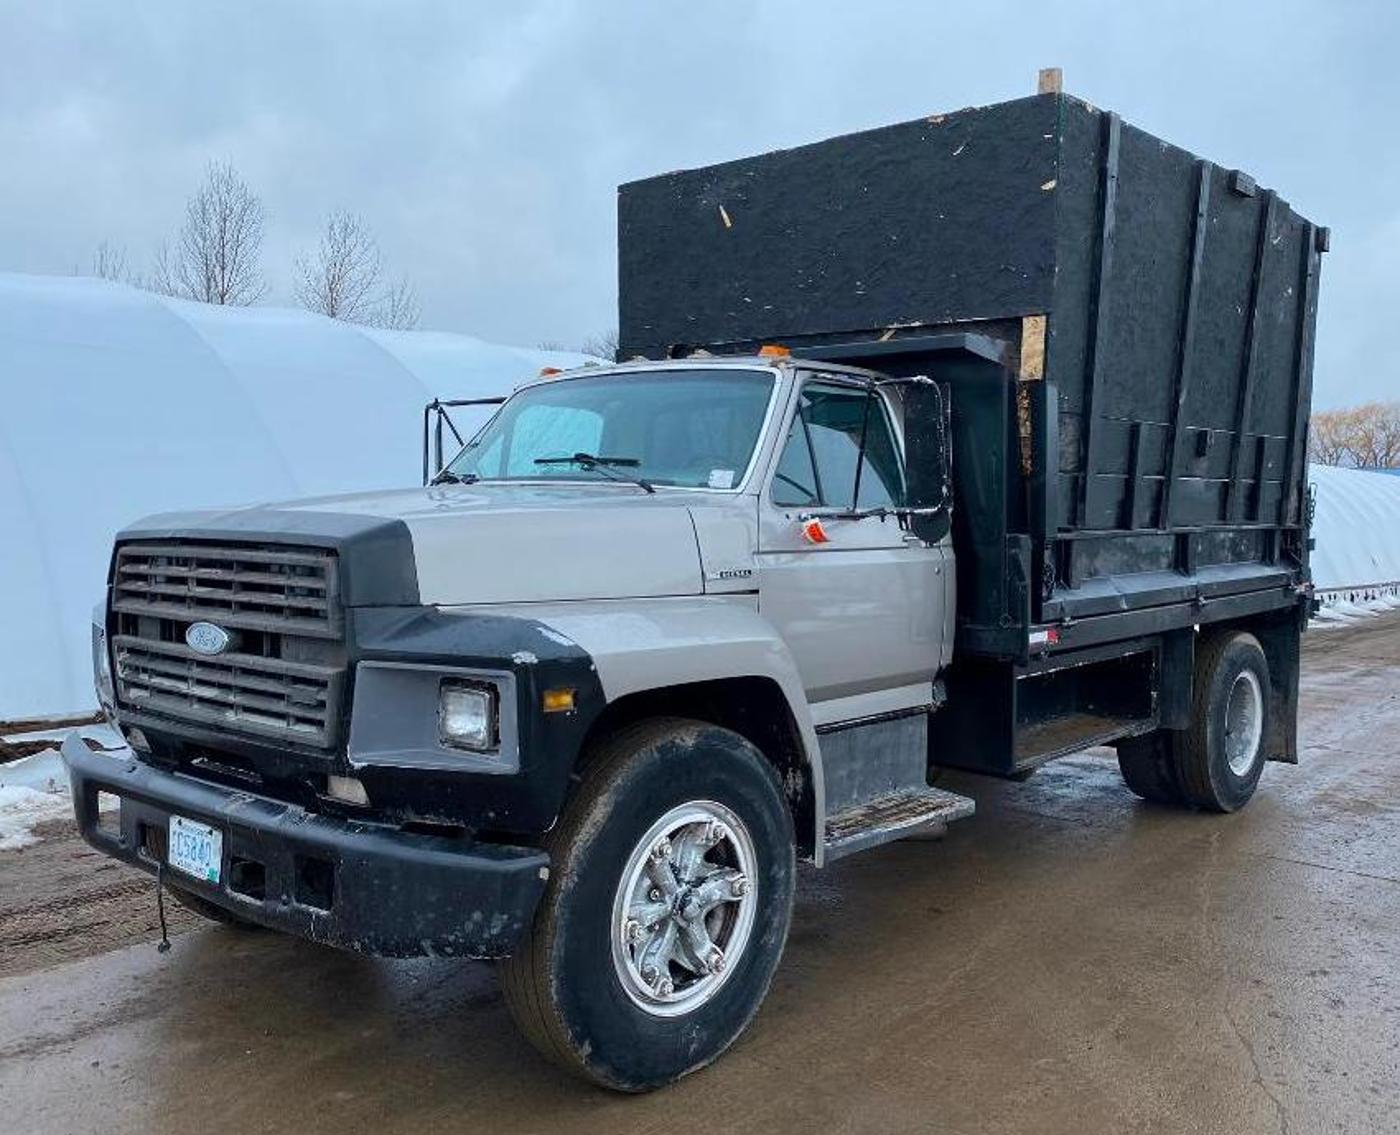 Lawncare Company Updating Equipment: Trucks, Trailers and Equipment